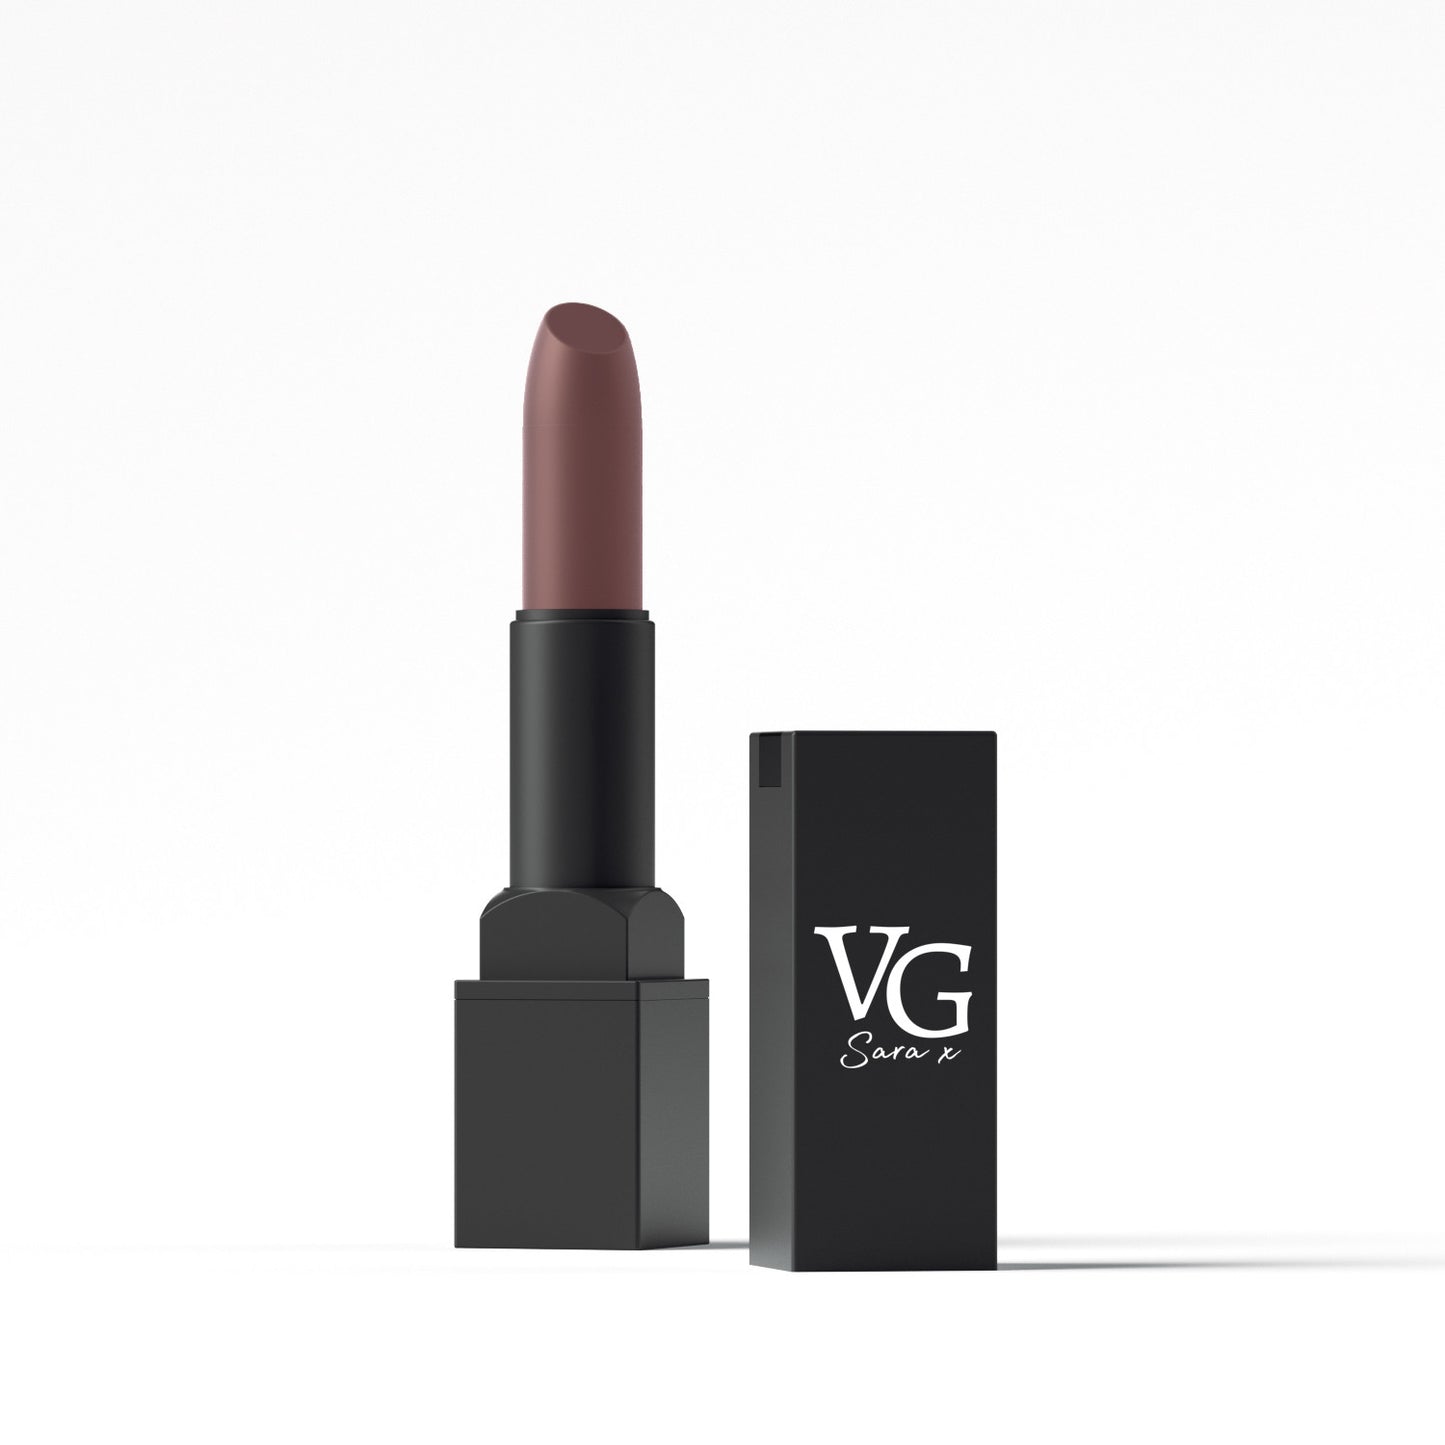 VG Cosmetics blackberry lipstick presented with its elegant black box